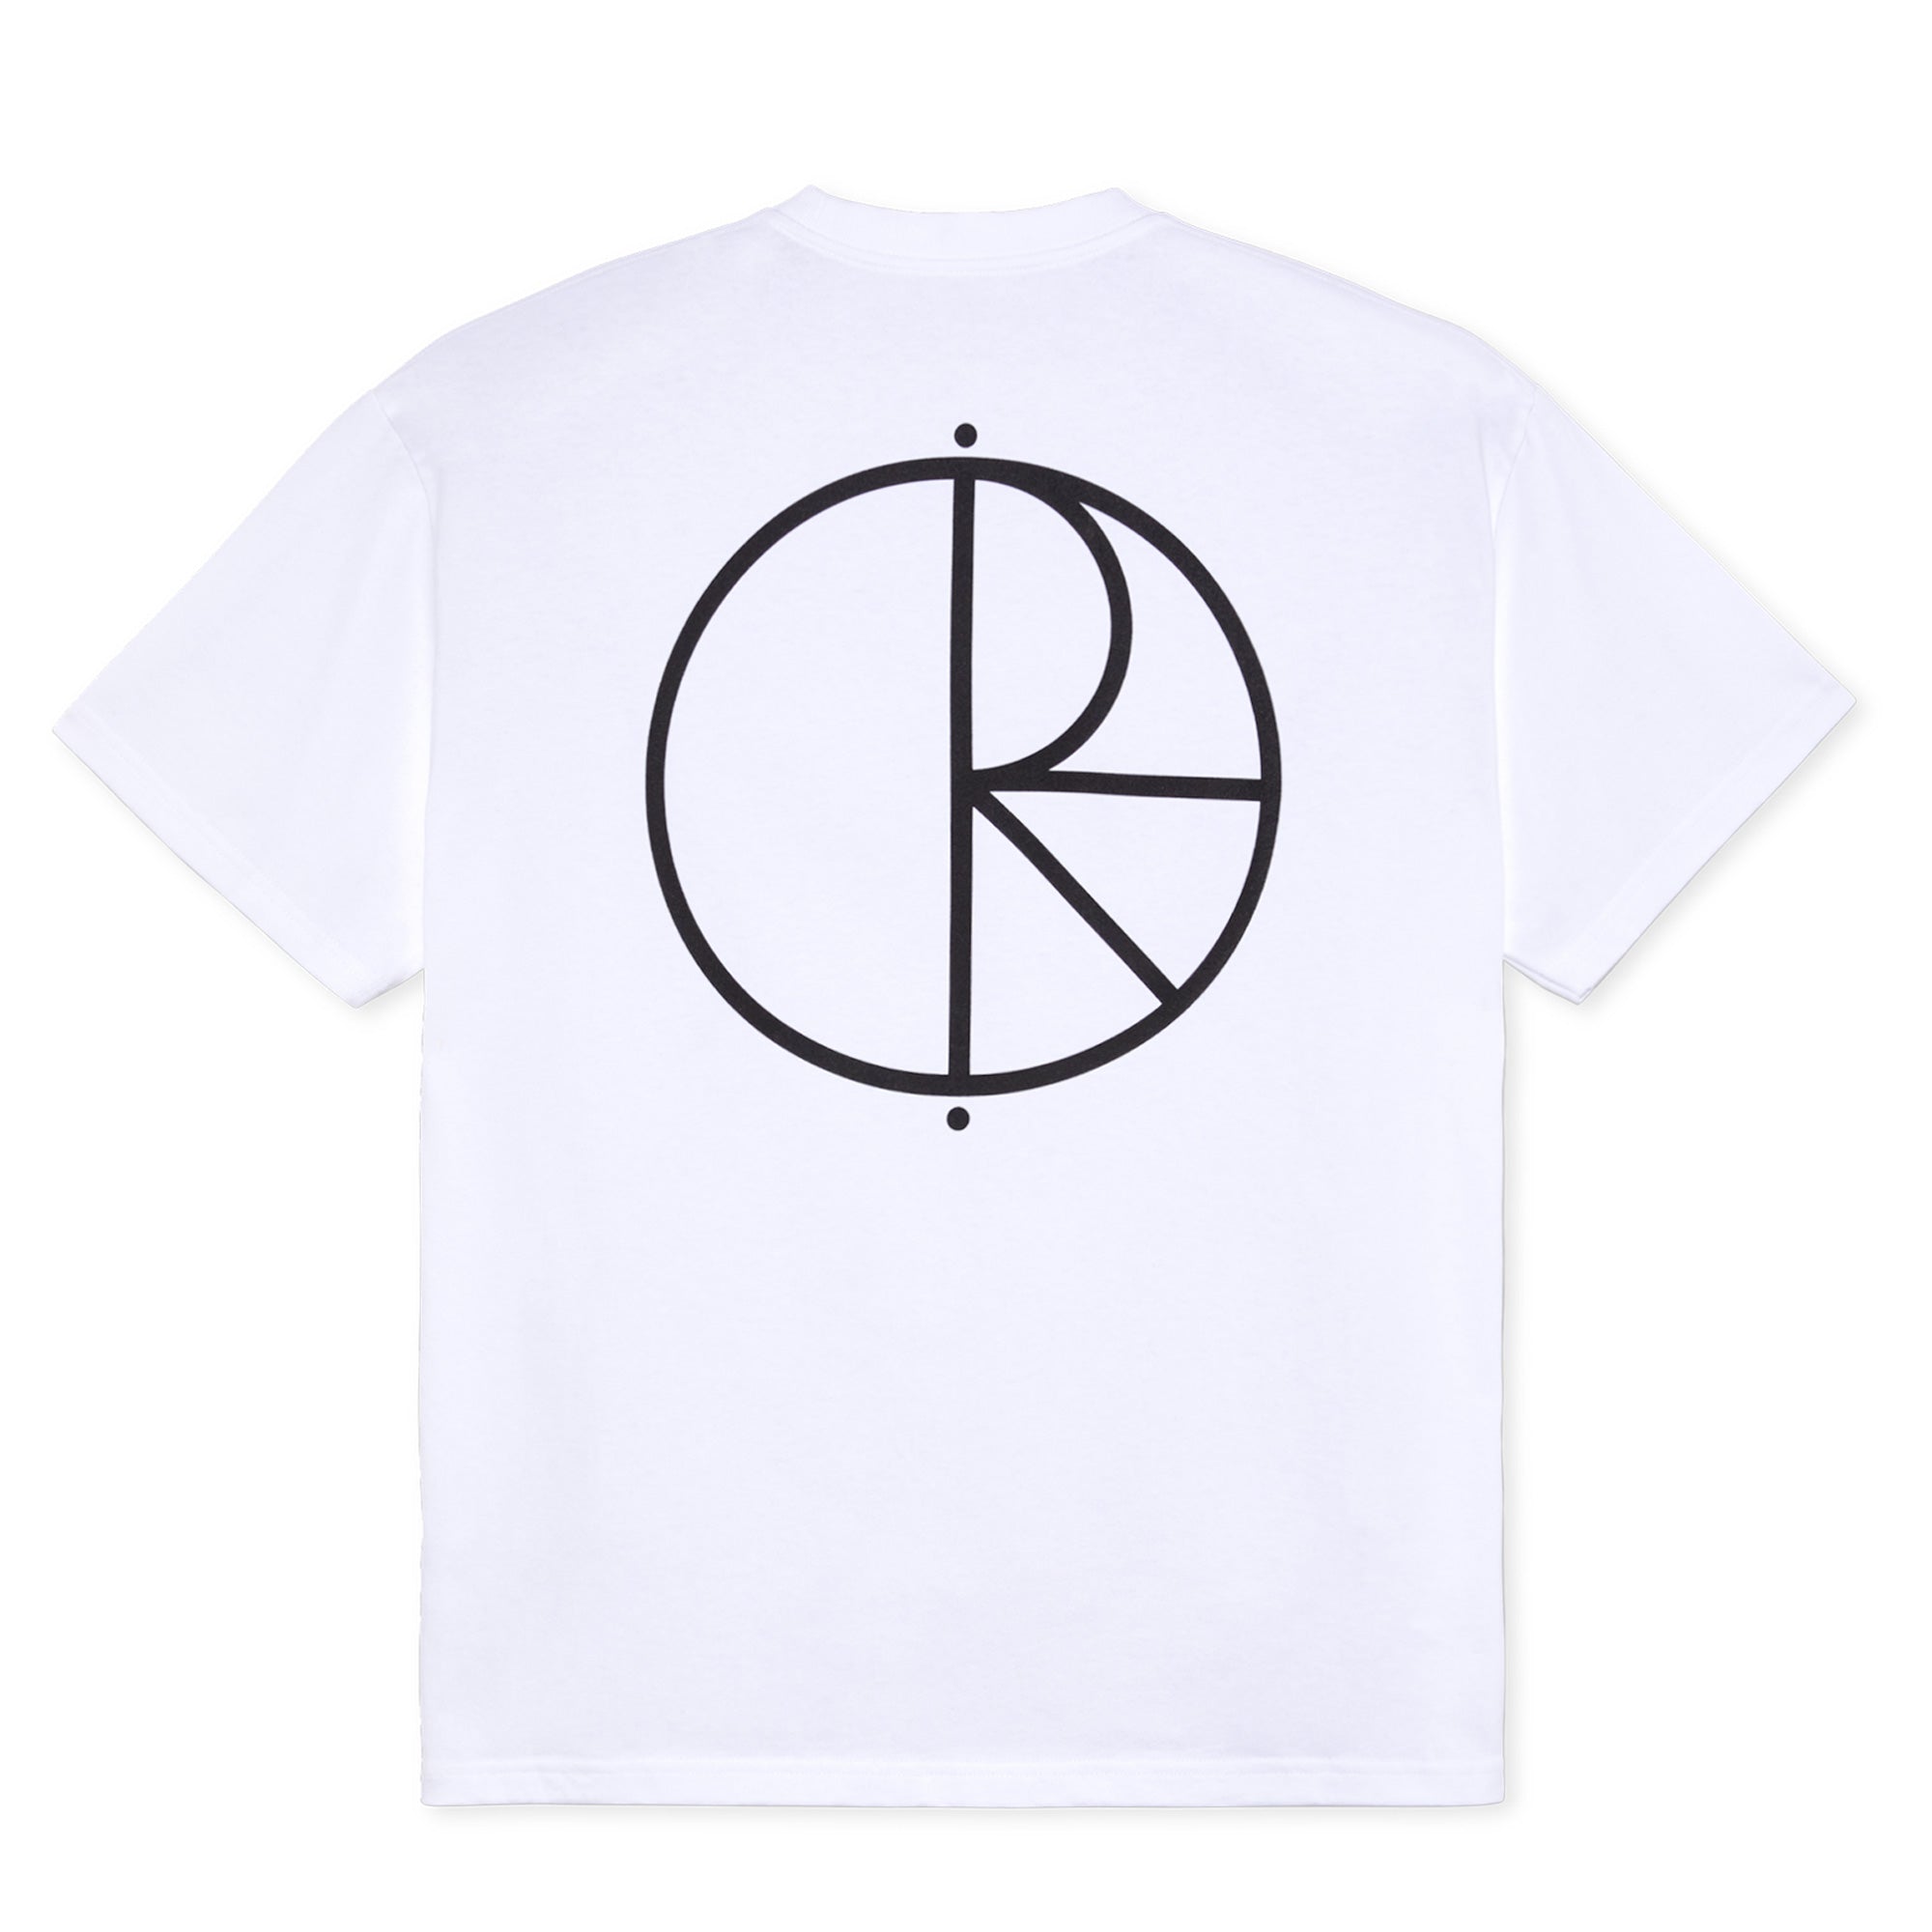 Polar Stroke Logo T-shirt - White